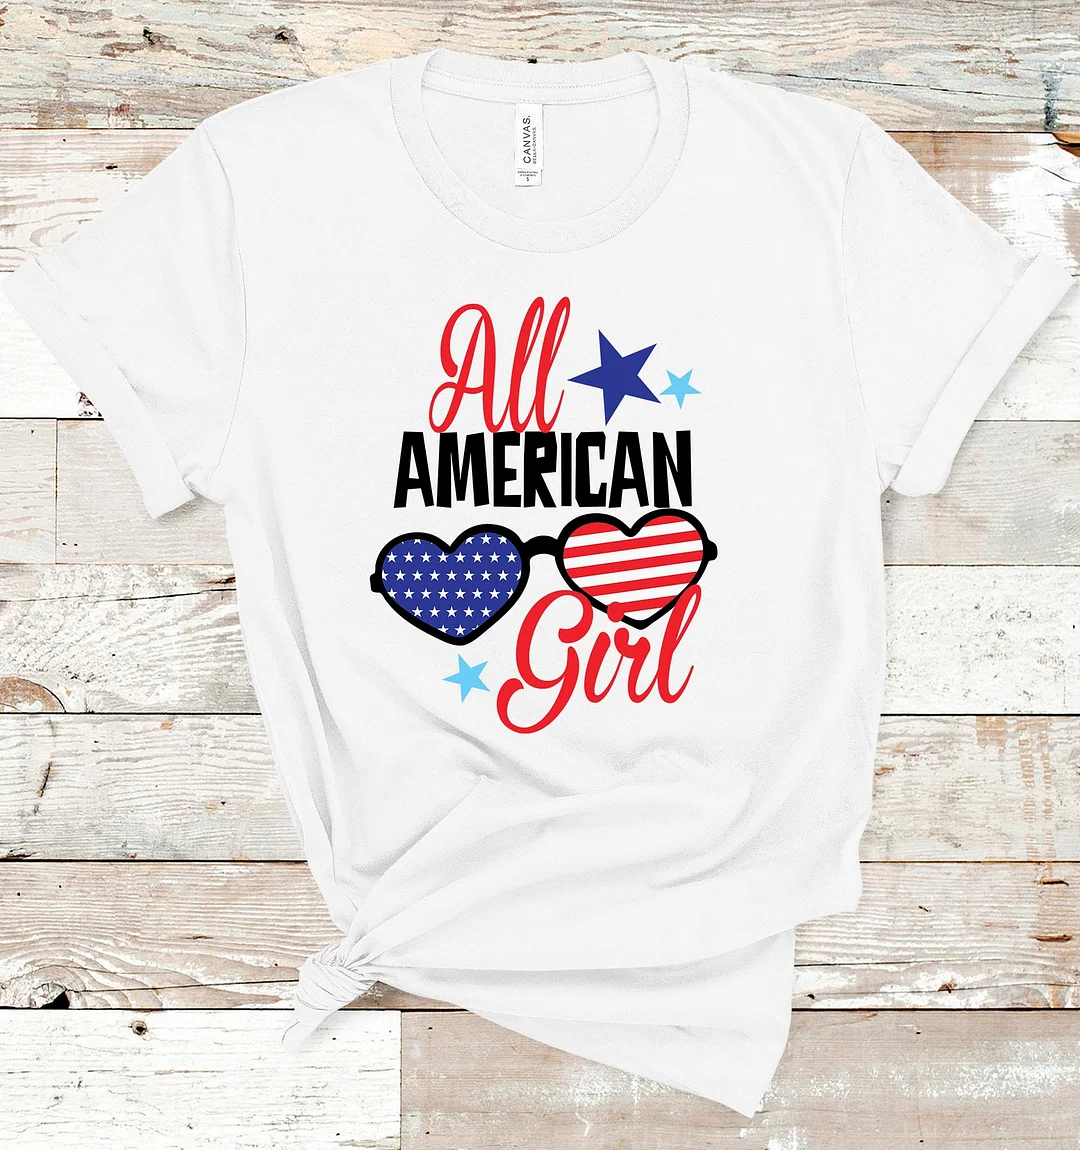 All American Girl Shirt July 4Th Kids America Merica Freedom Stars And Stripes Top Tees